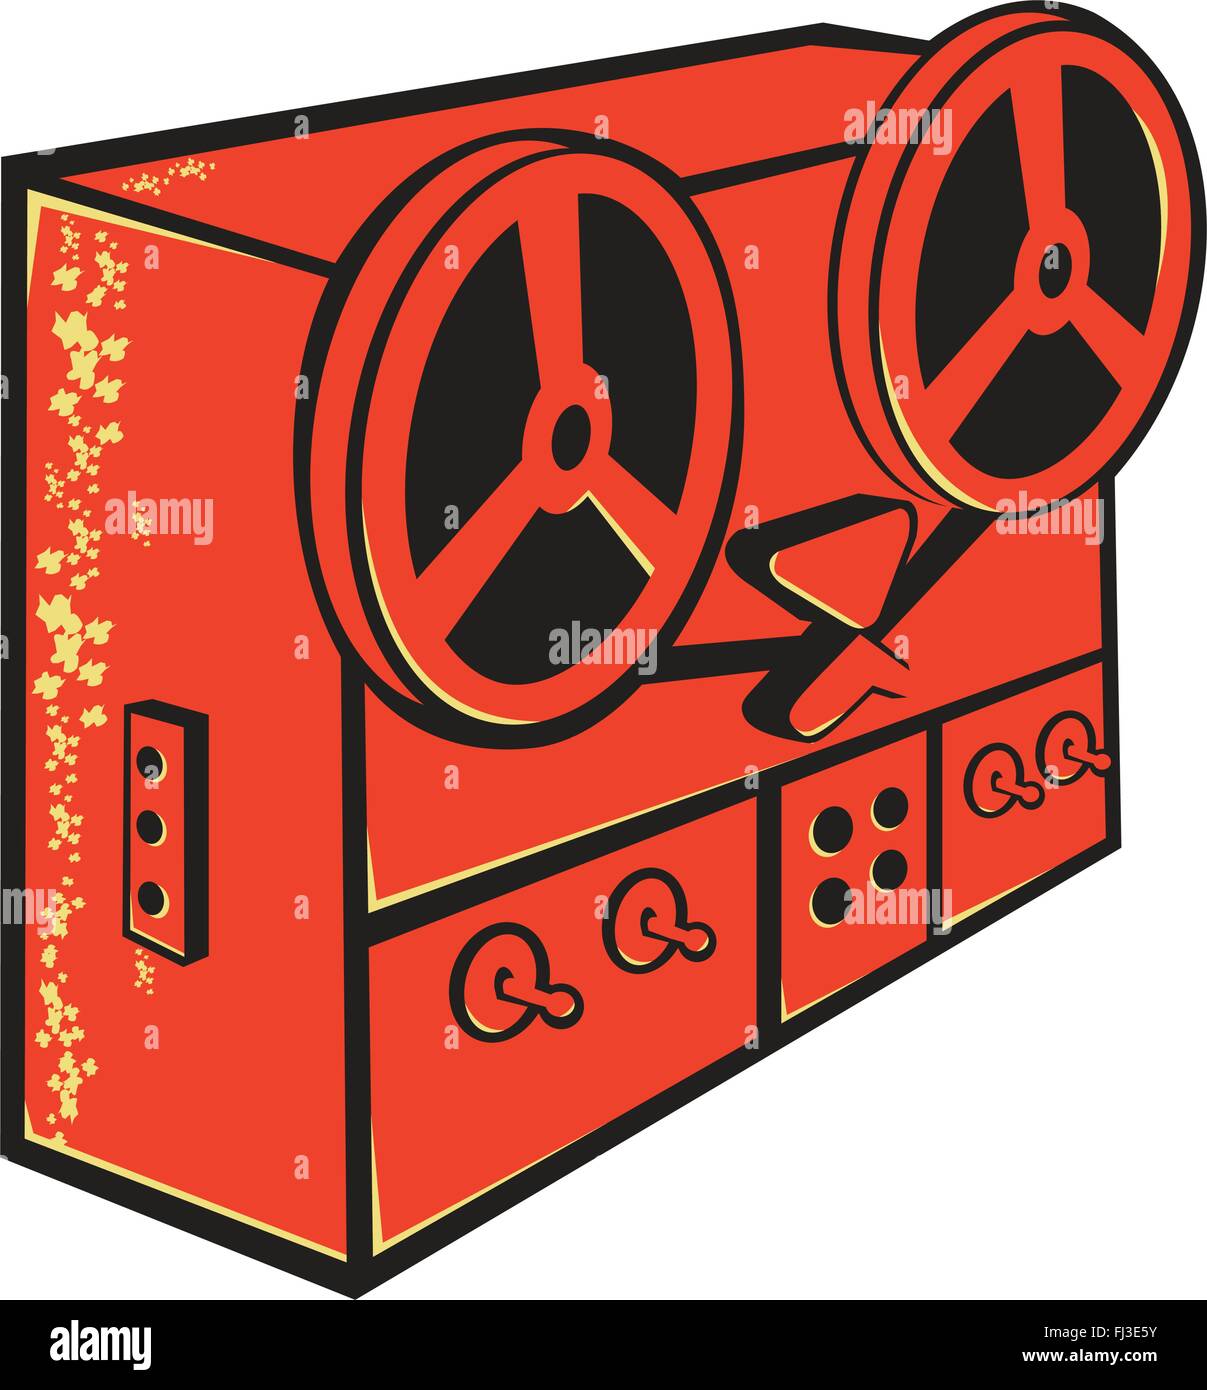 https://c8.alamy.com/comp/FJ3E5Y/vector-illustration-of-a-tape-recorder-tape-deck-reel-to-reel-tape-FJ3E5Y.jpg